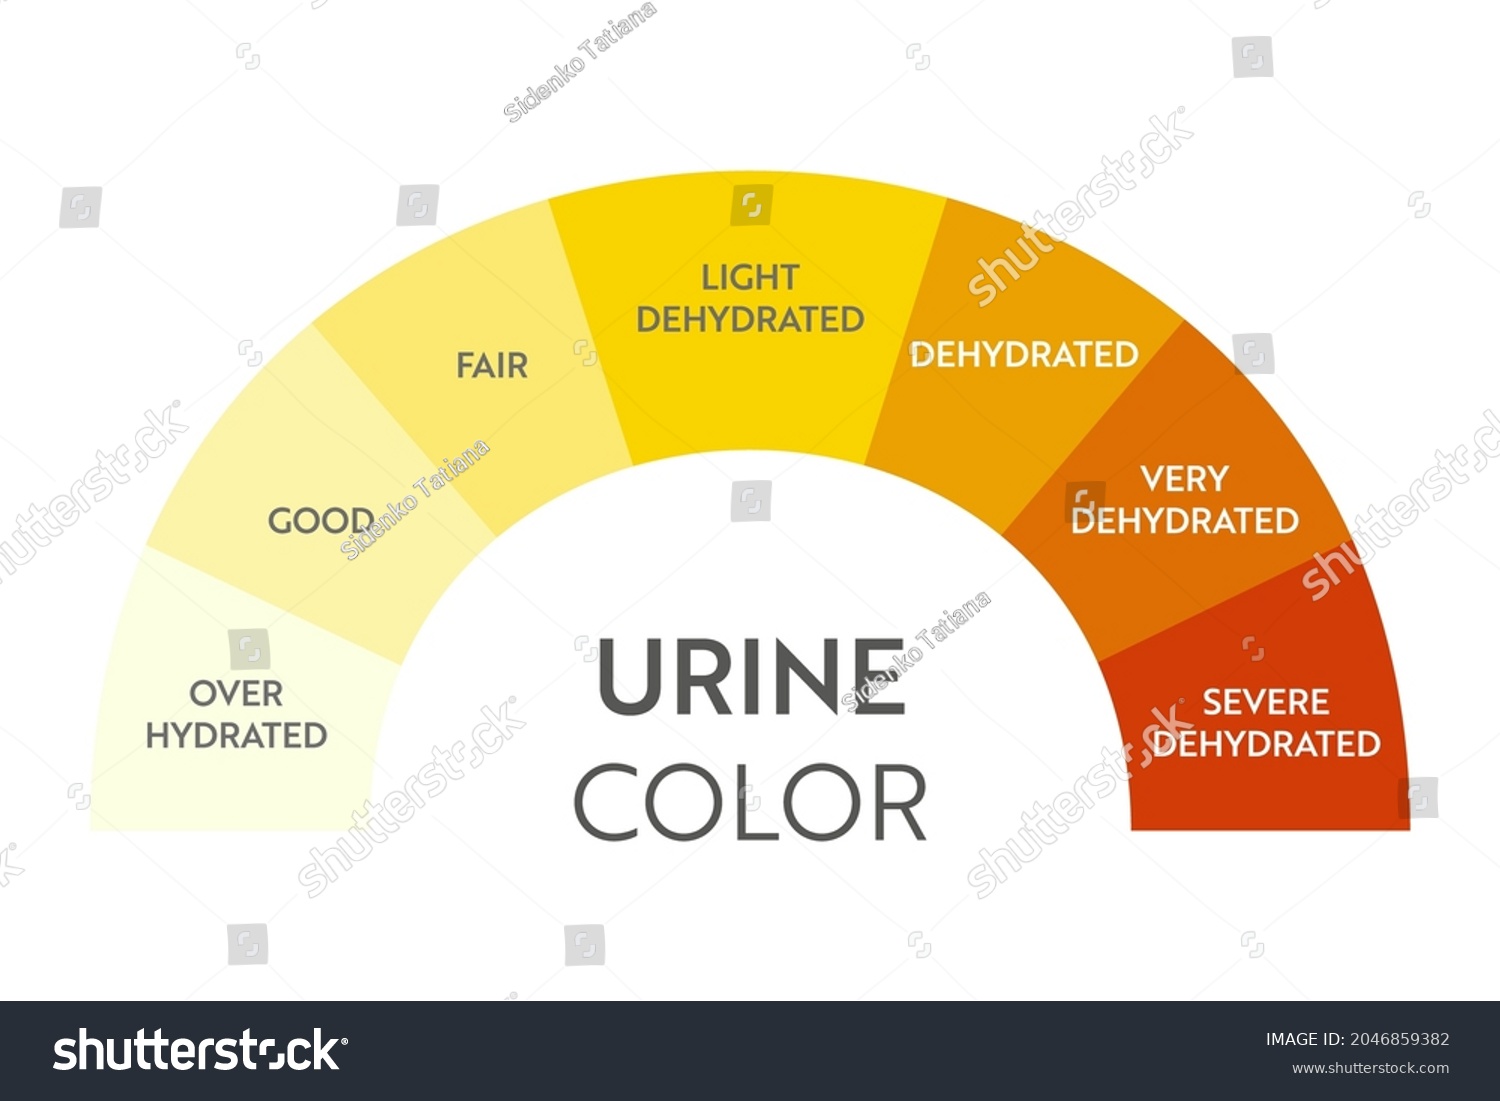 urine-color-test-images-stock-photos-vectors-shutterstock